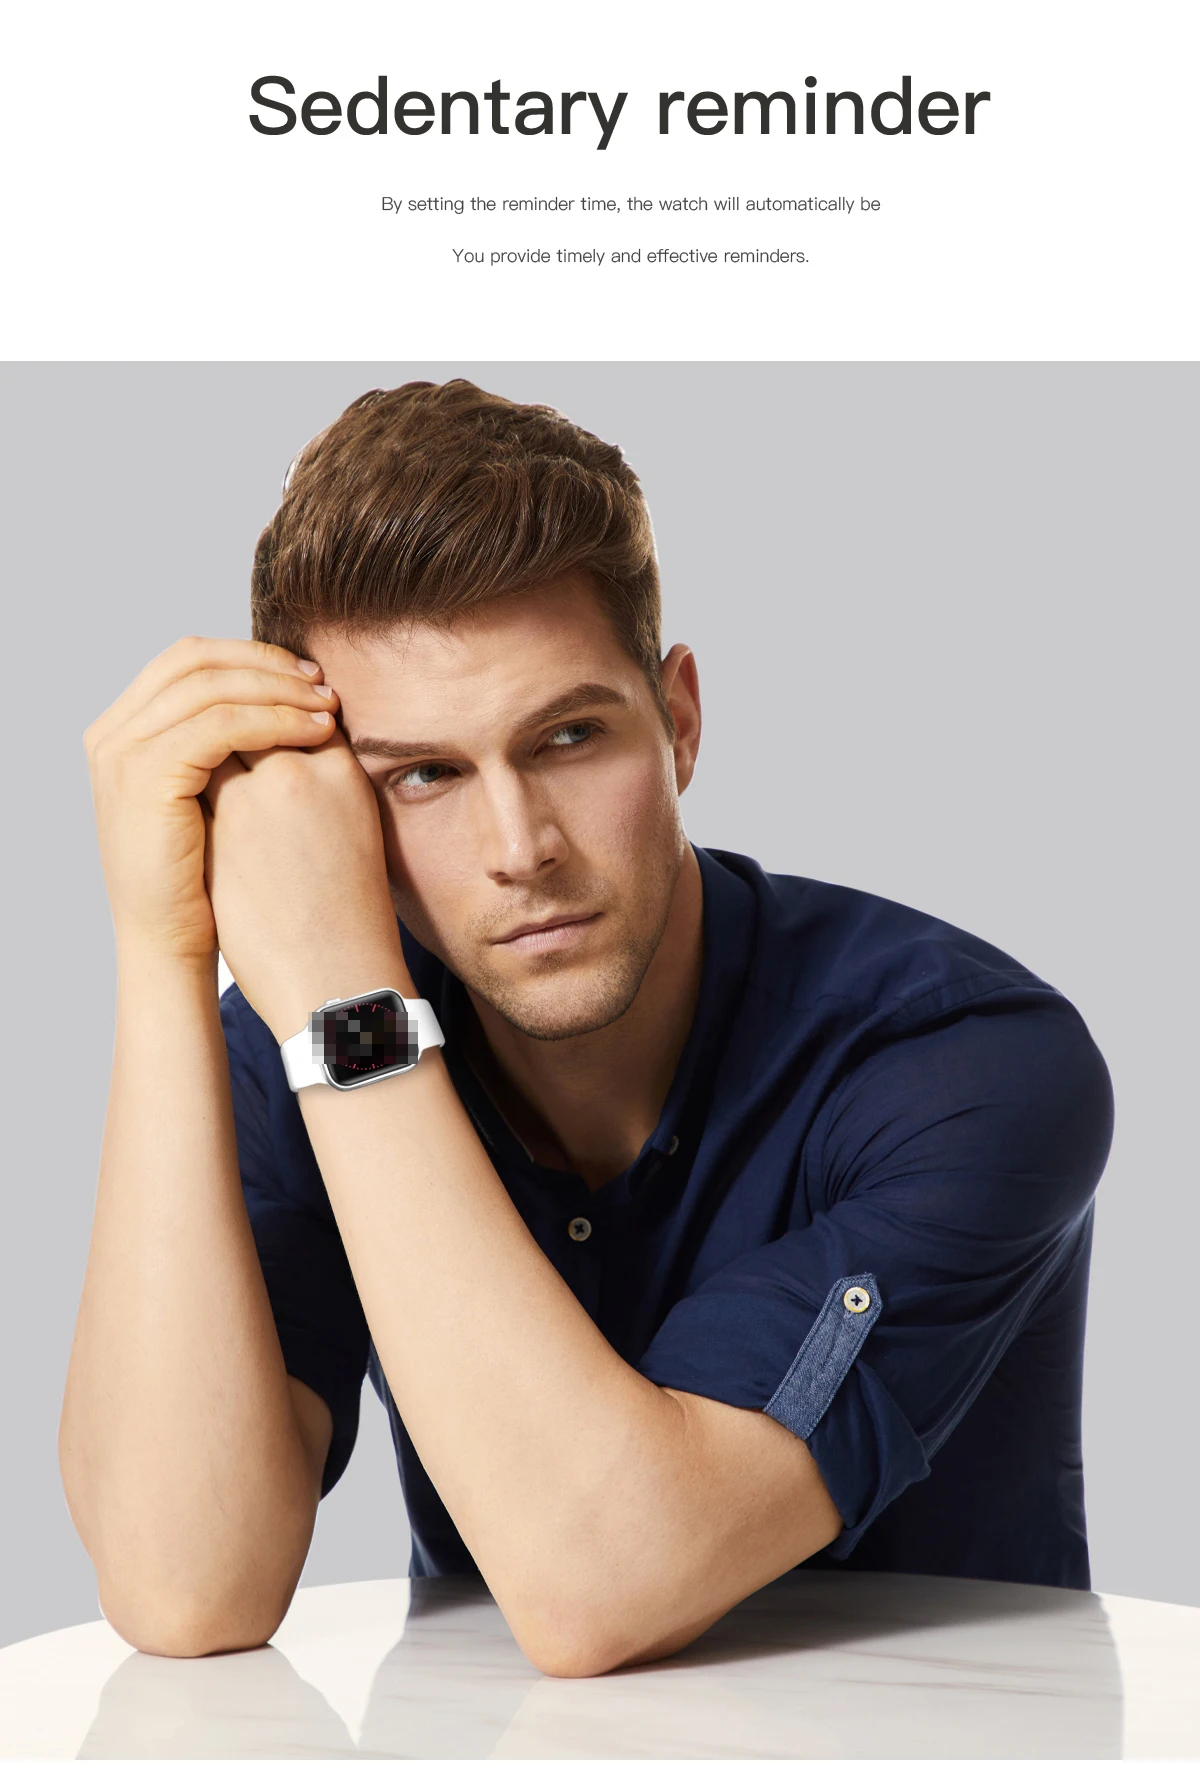 IWO 11 gps Смарт-часы Мужские Bluetooth умные часы 1:1 44 мм чехол для Apple iOS Android телефон умные часы VS IWO 8 IWO 6 9 5 часы